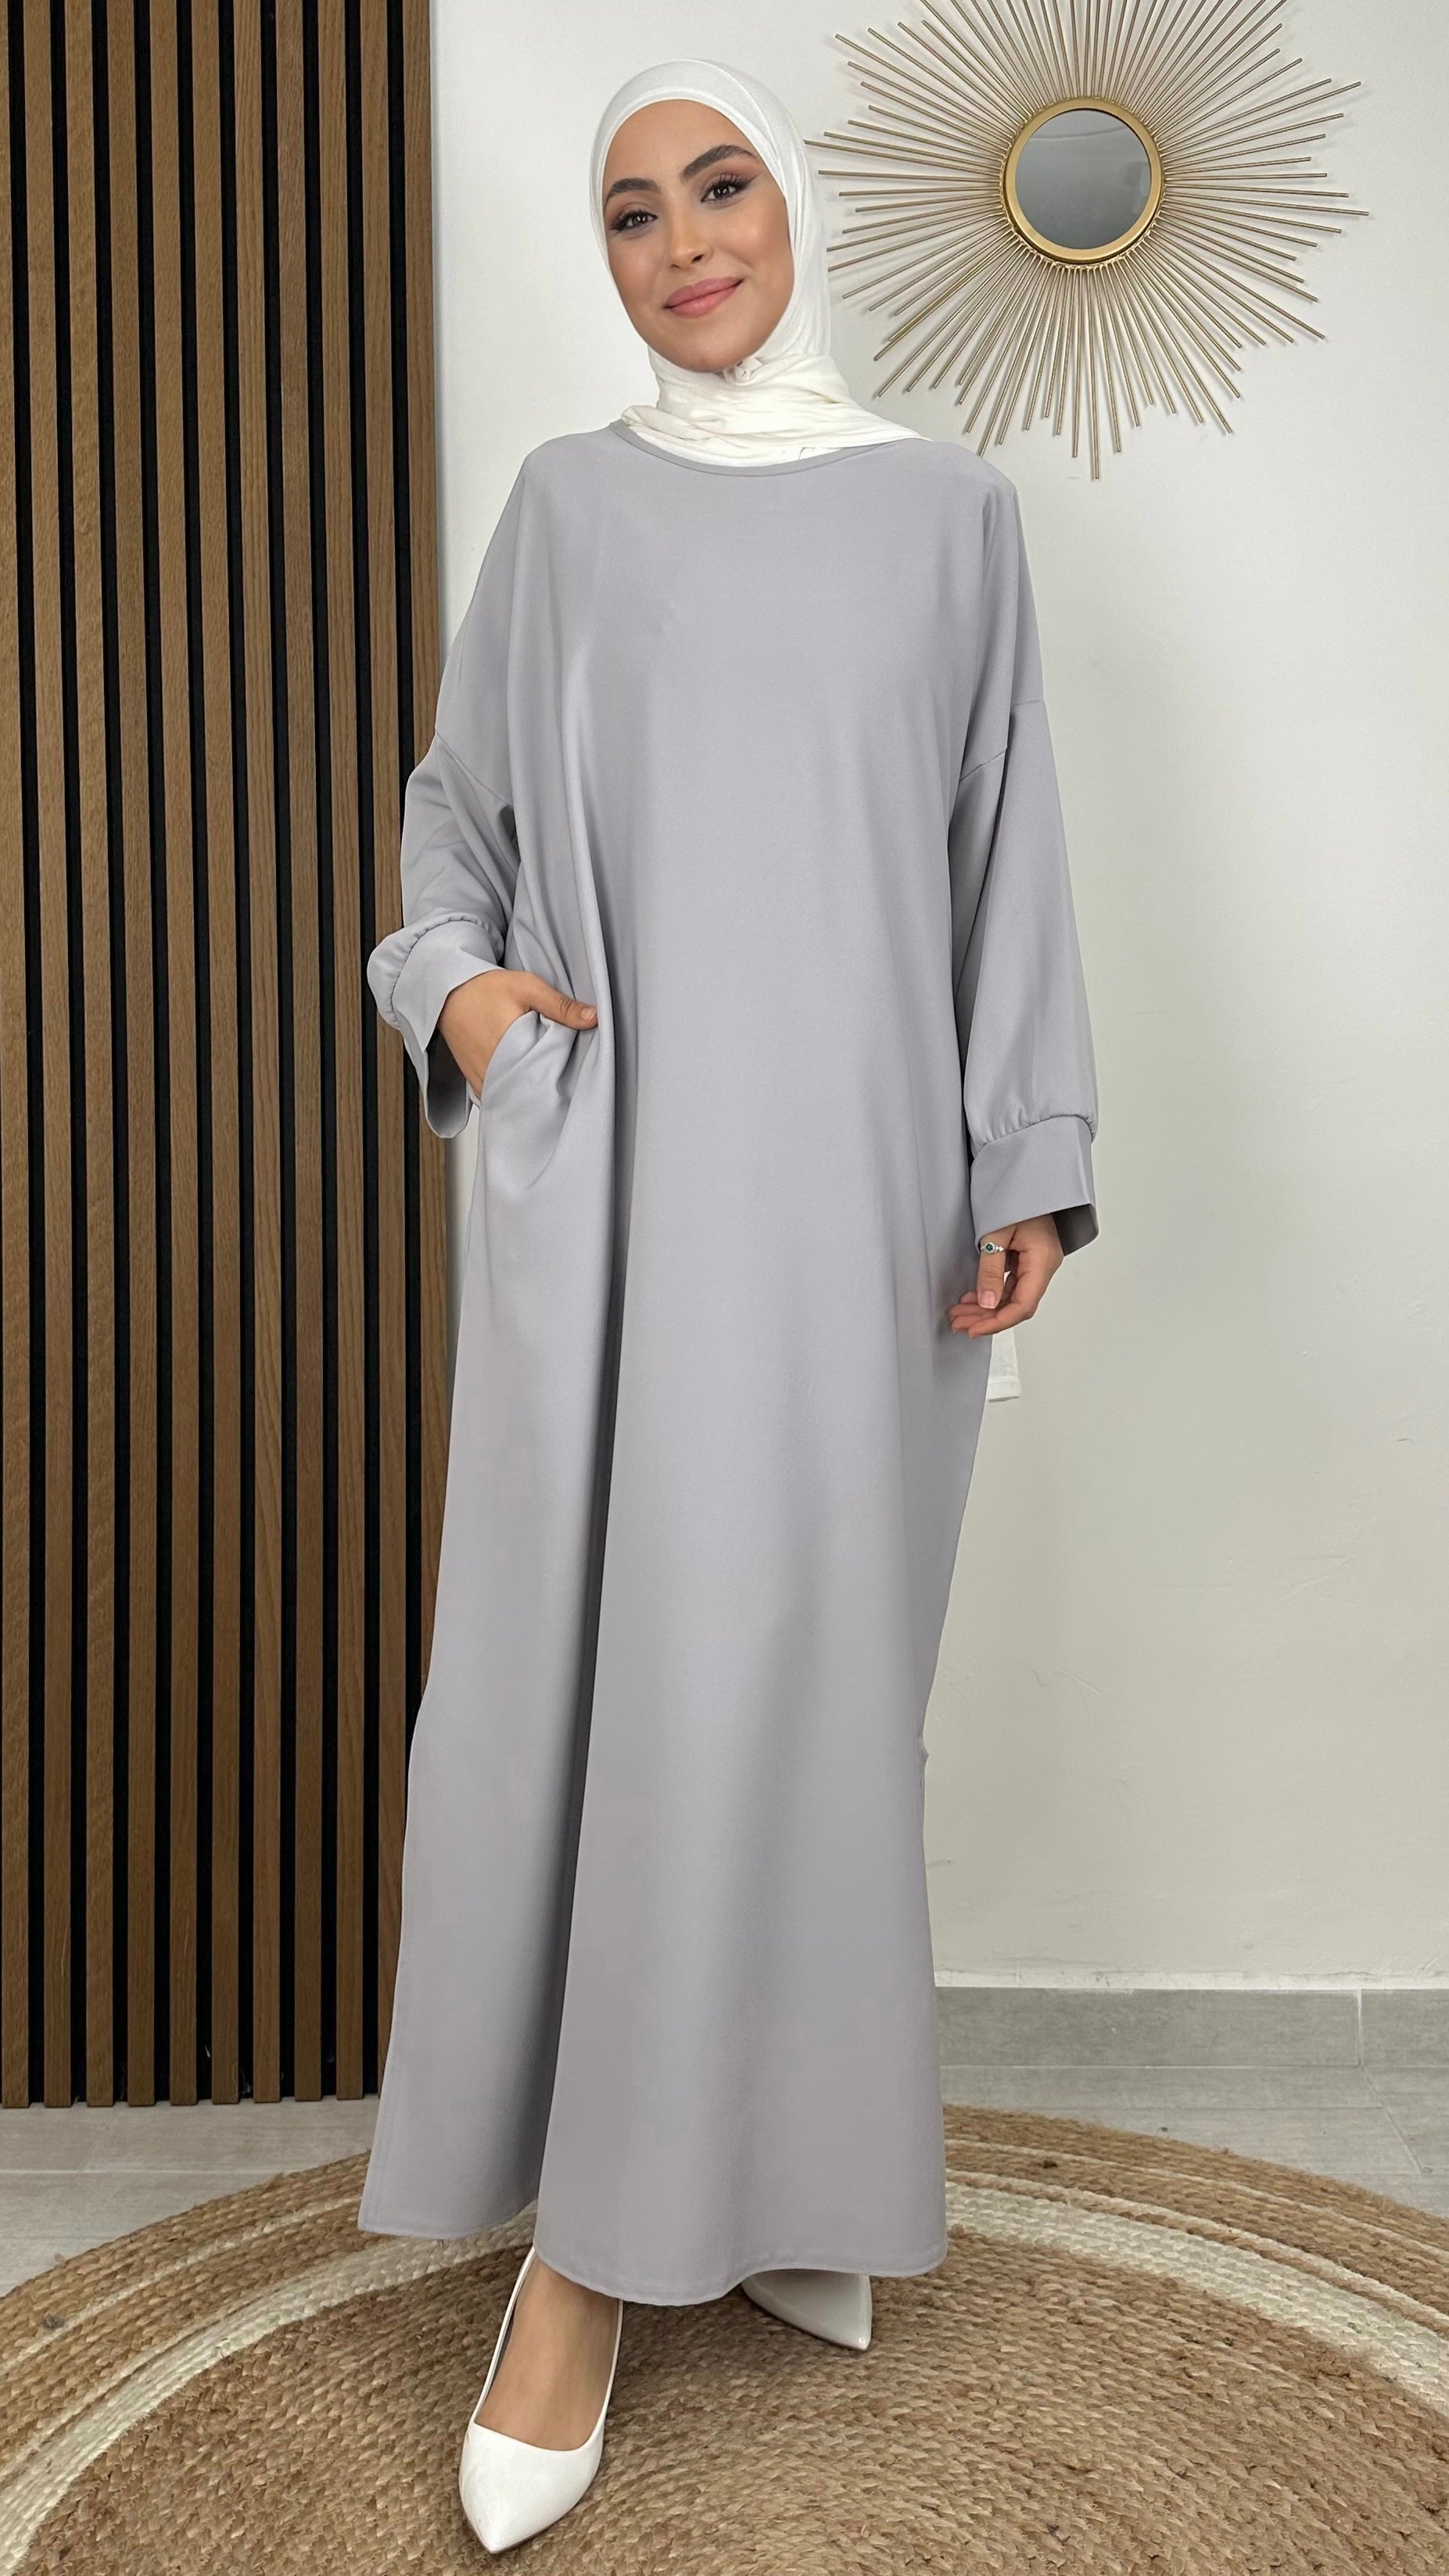 Abaya split  - abaya semplice - abaya con tasche - hijab  - abaya per pellegrinaggio - umra e hajj - leggero spacco laterale - grigio